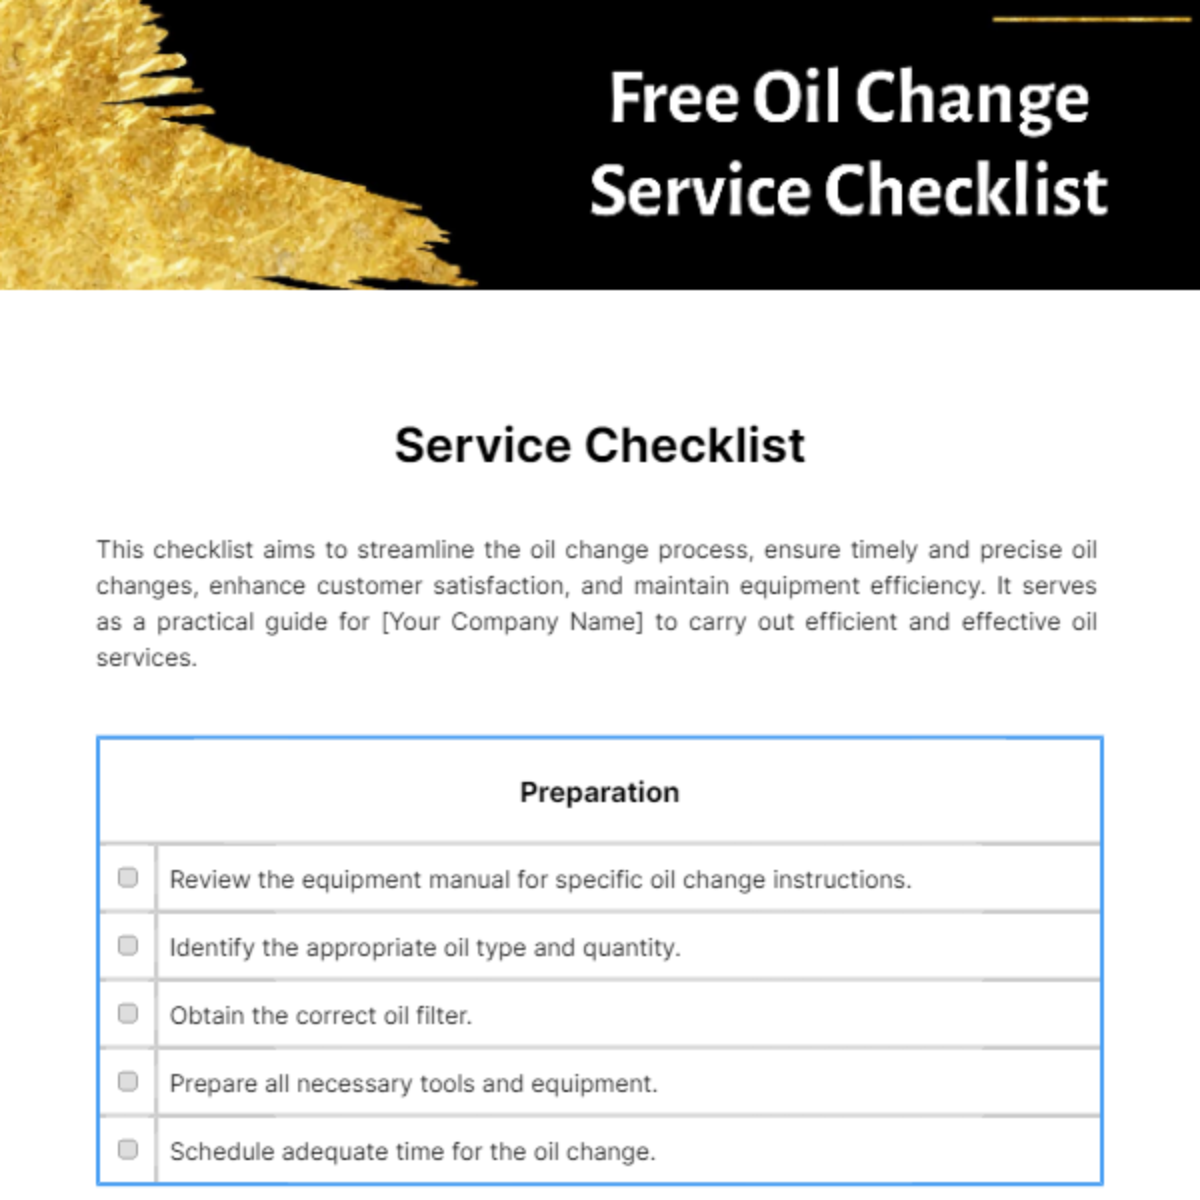 Free Oil Change Service Checklist Template